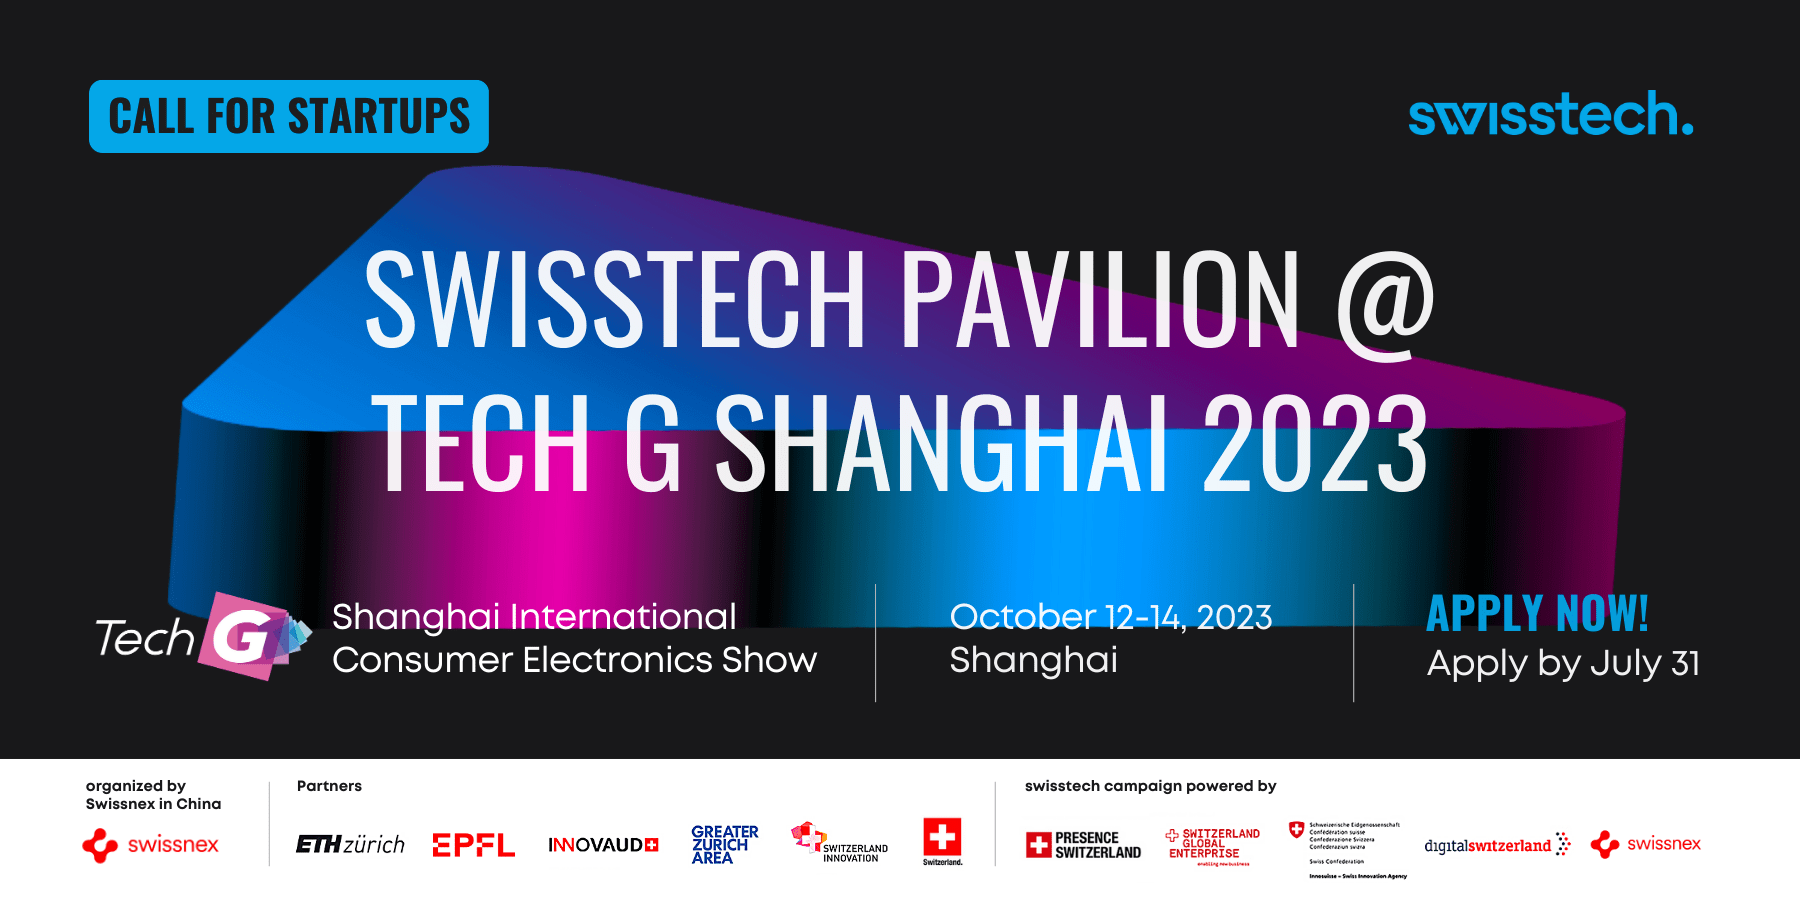 TechG Shanghai 2023